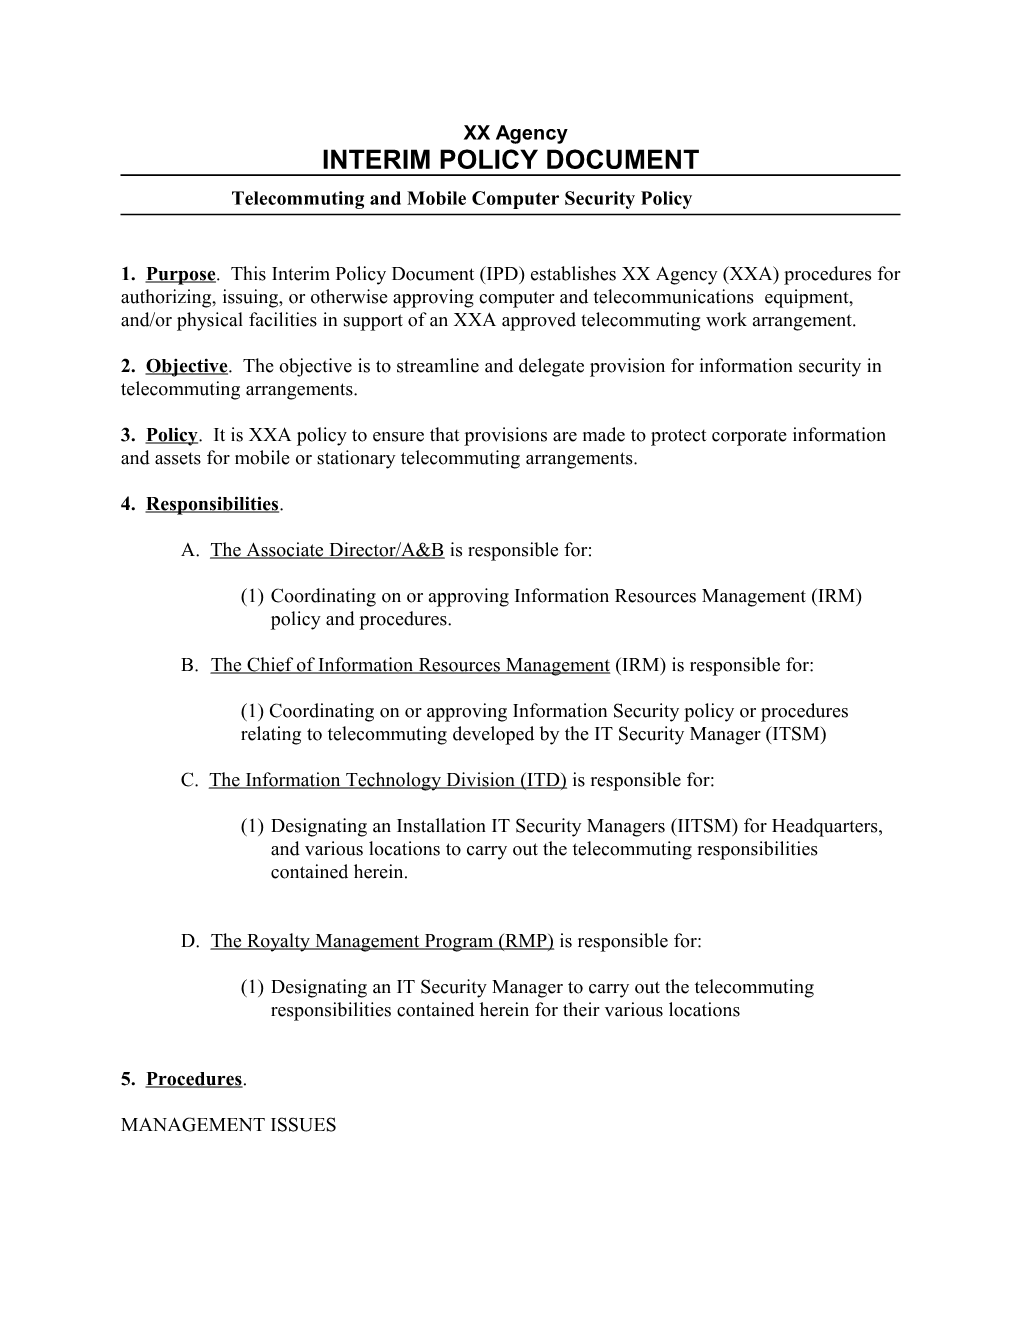 Interim Policy Document